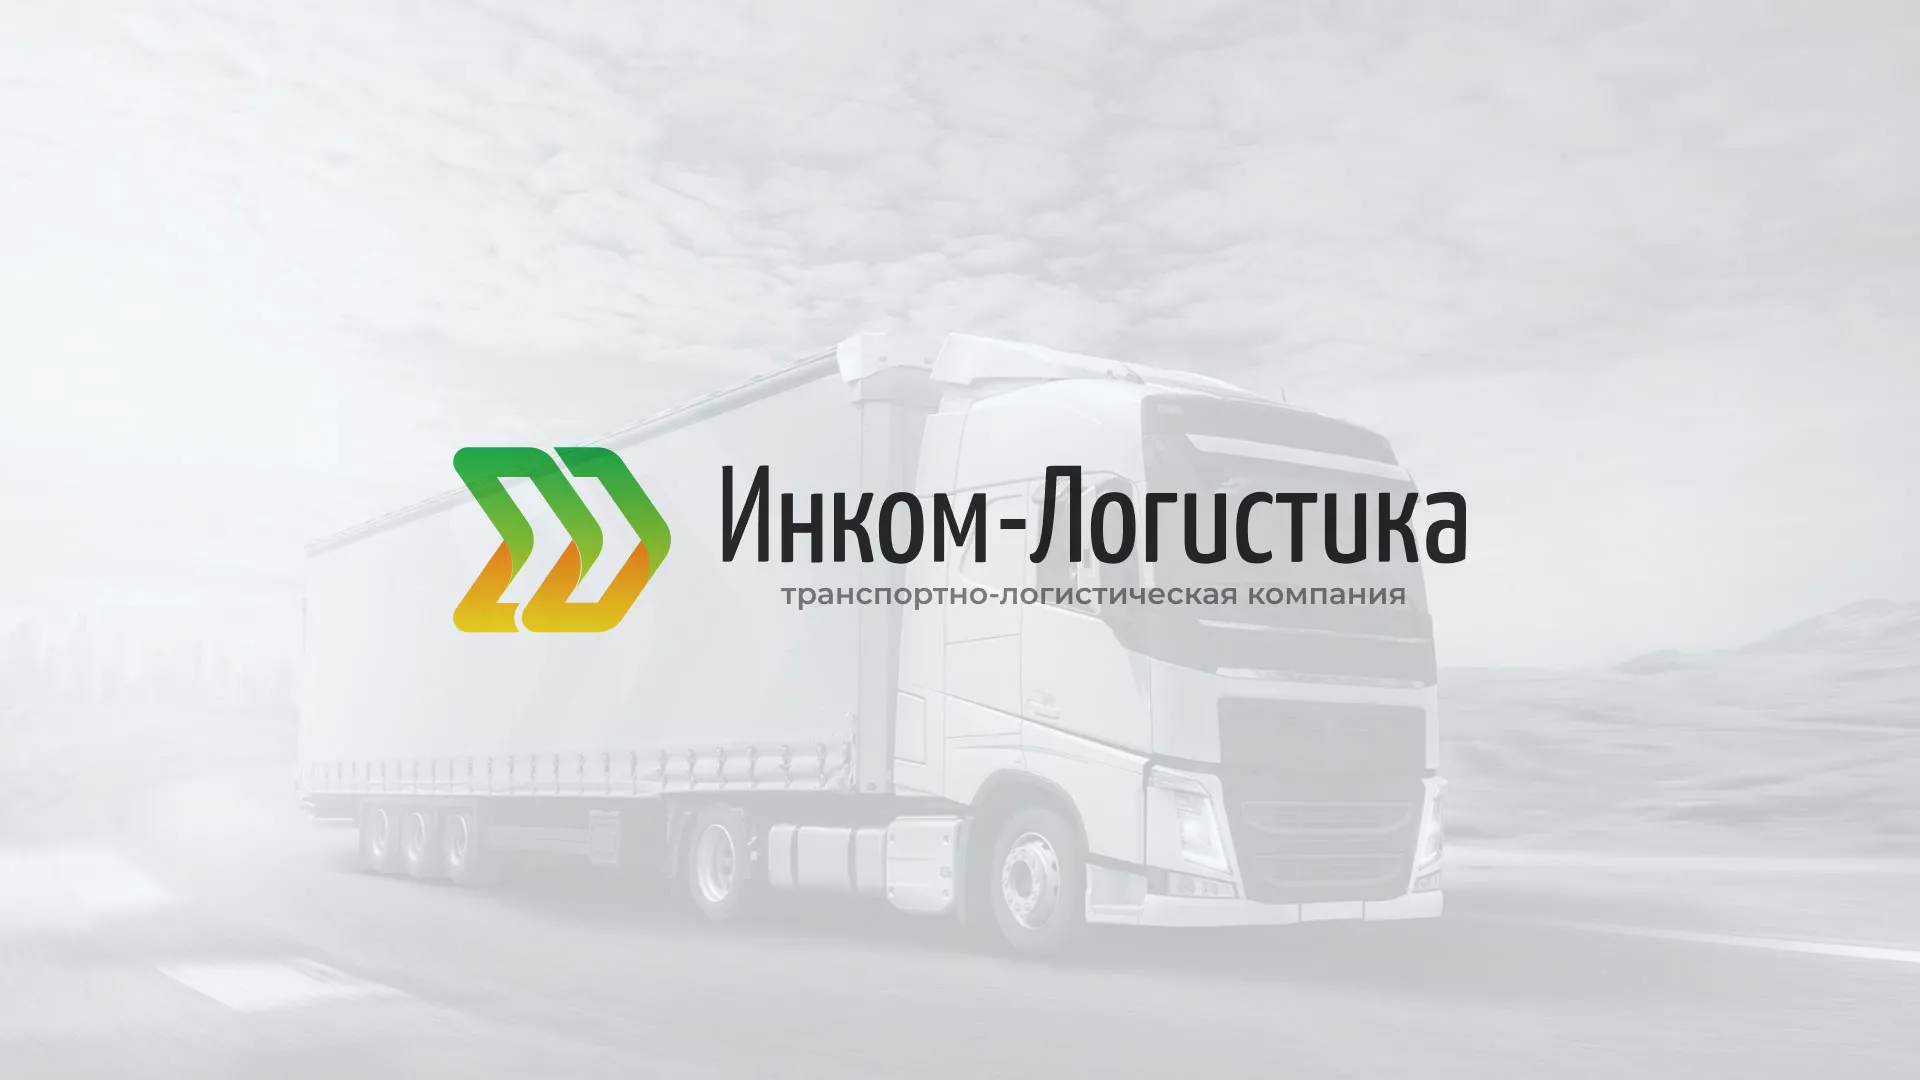 Разработка логотипа и сайта компании «Инком-Логистика» в Томске